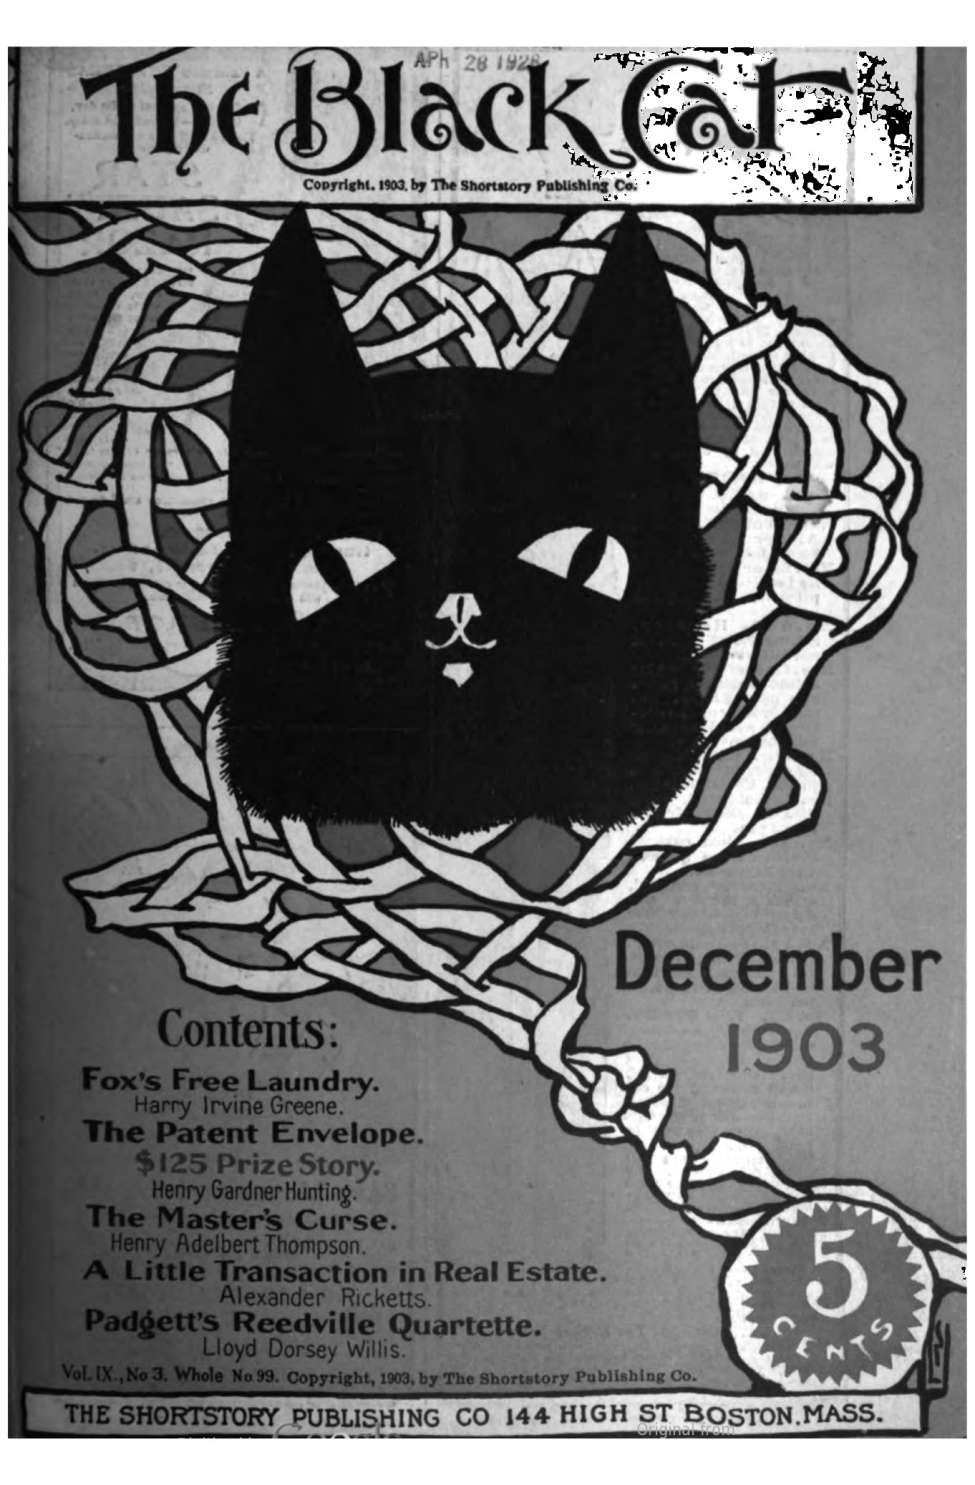 Book Cover For The Black Cat v9 3 - Fox’s Free Laundry - Harry Irving Greene